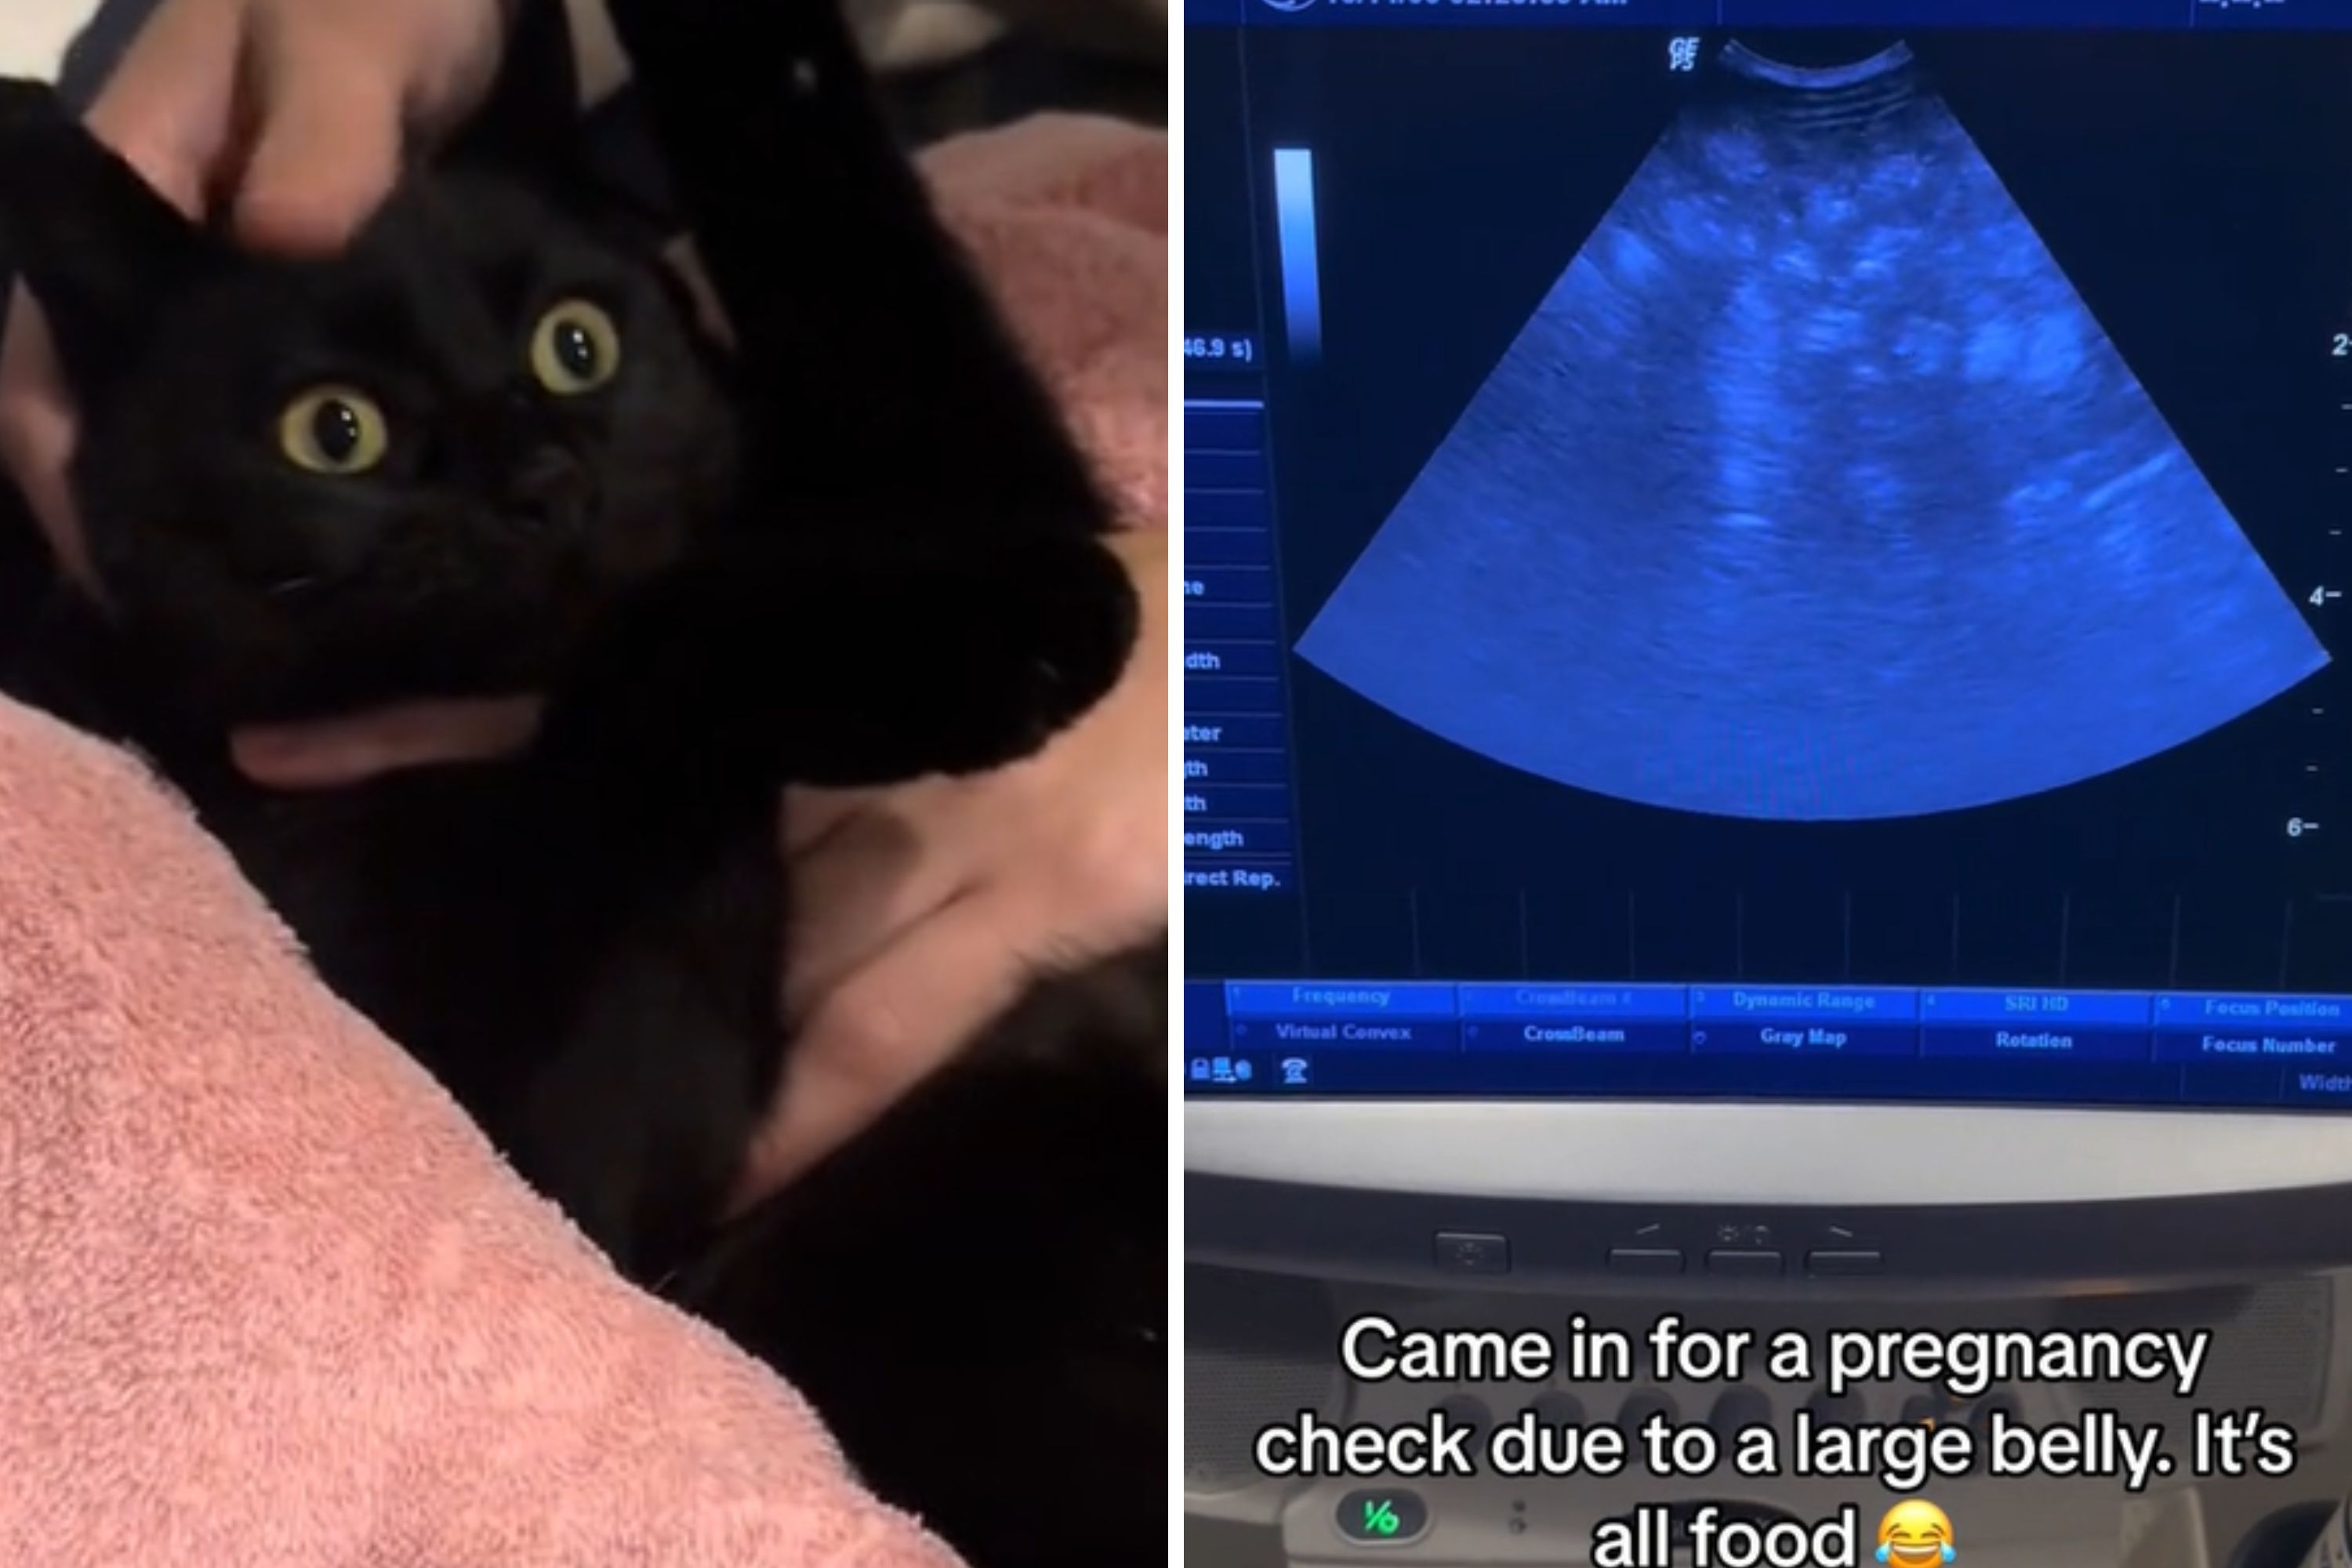 Black cat scan